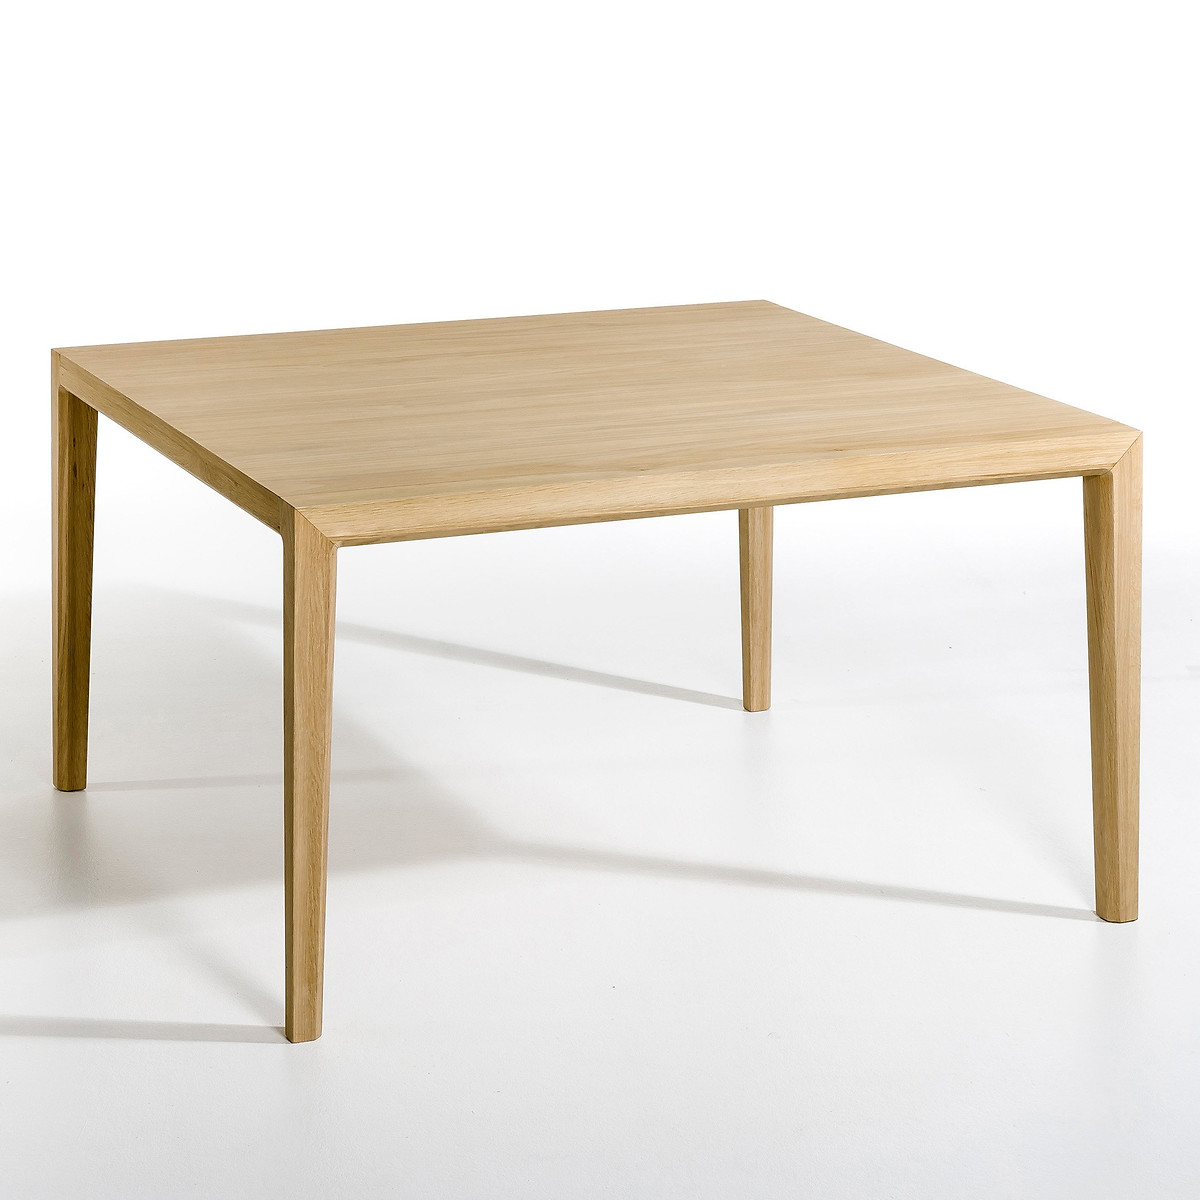 Стол квадратный Nizou дизайн Э Галлины на 8 персон каштановый стол складной diletta д 140 дизайнер э галлины единый размер каштановый